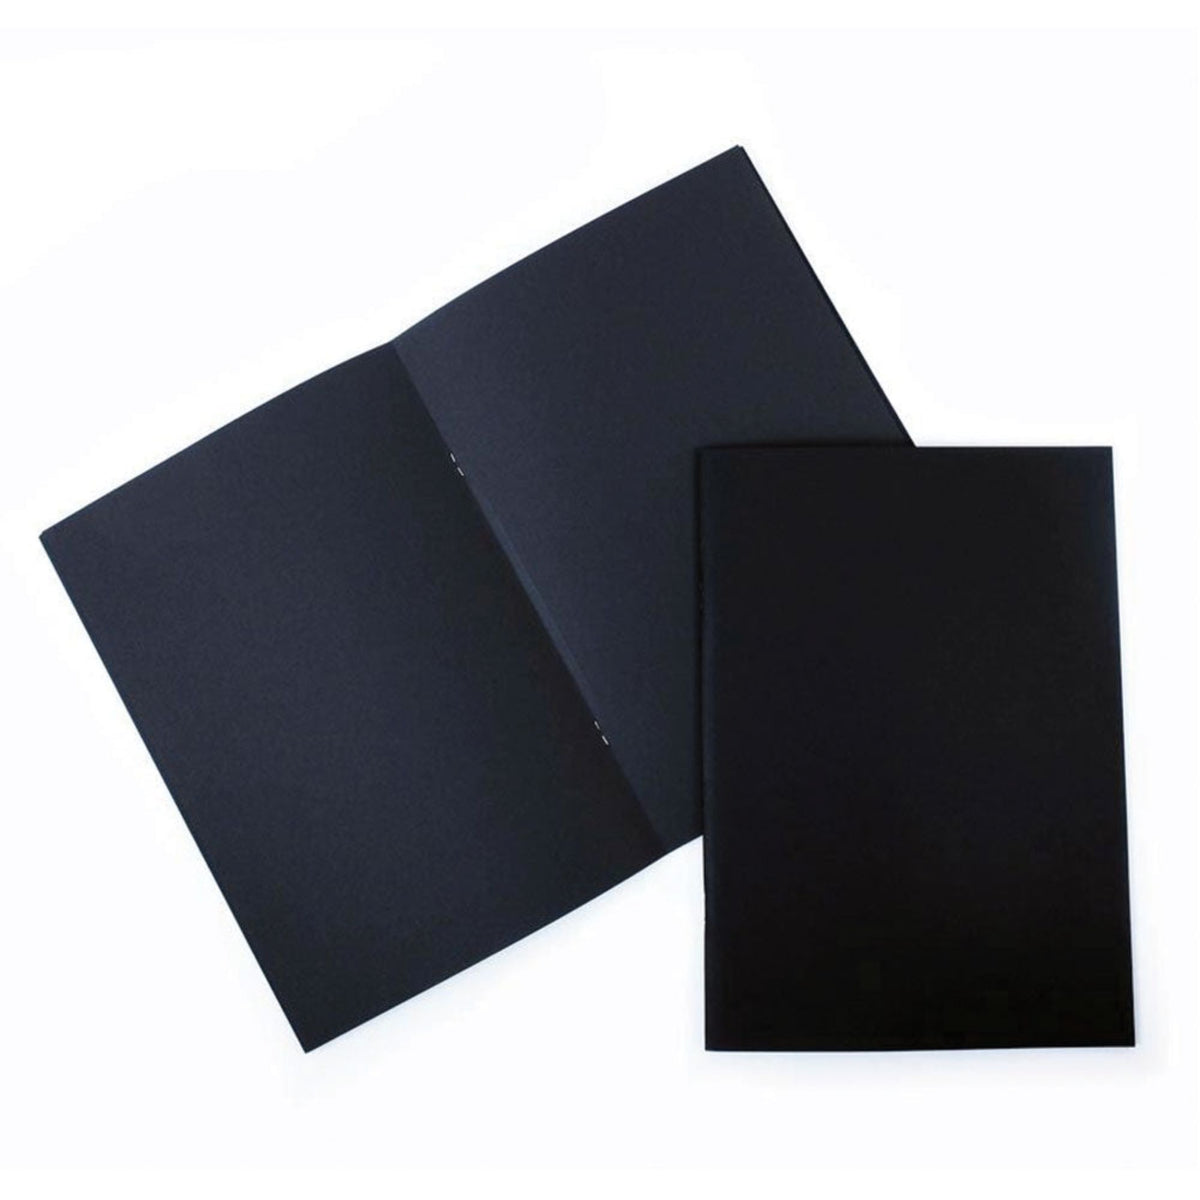 Seawhite All Black Paper Starter Sketchbook